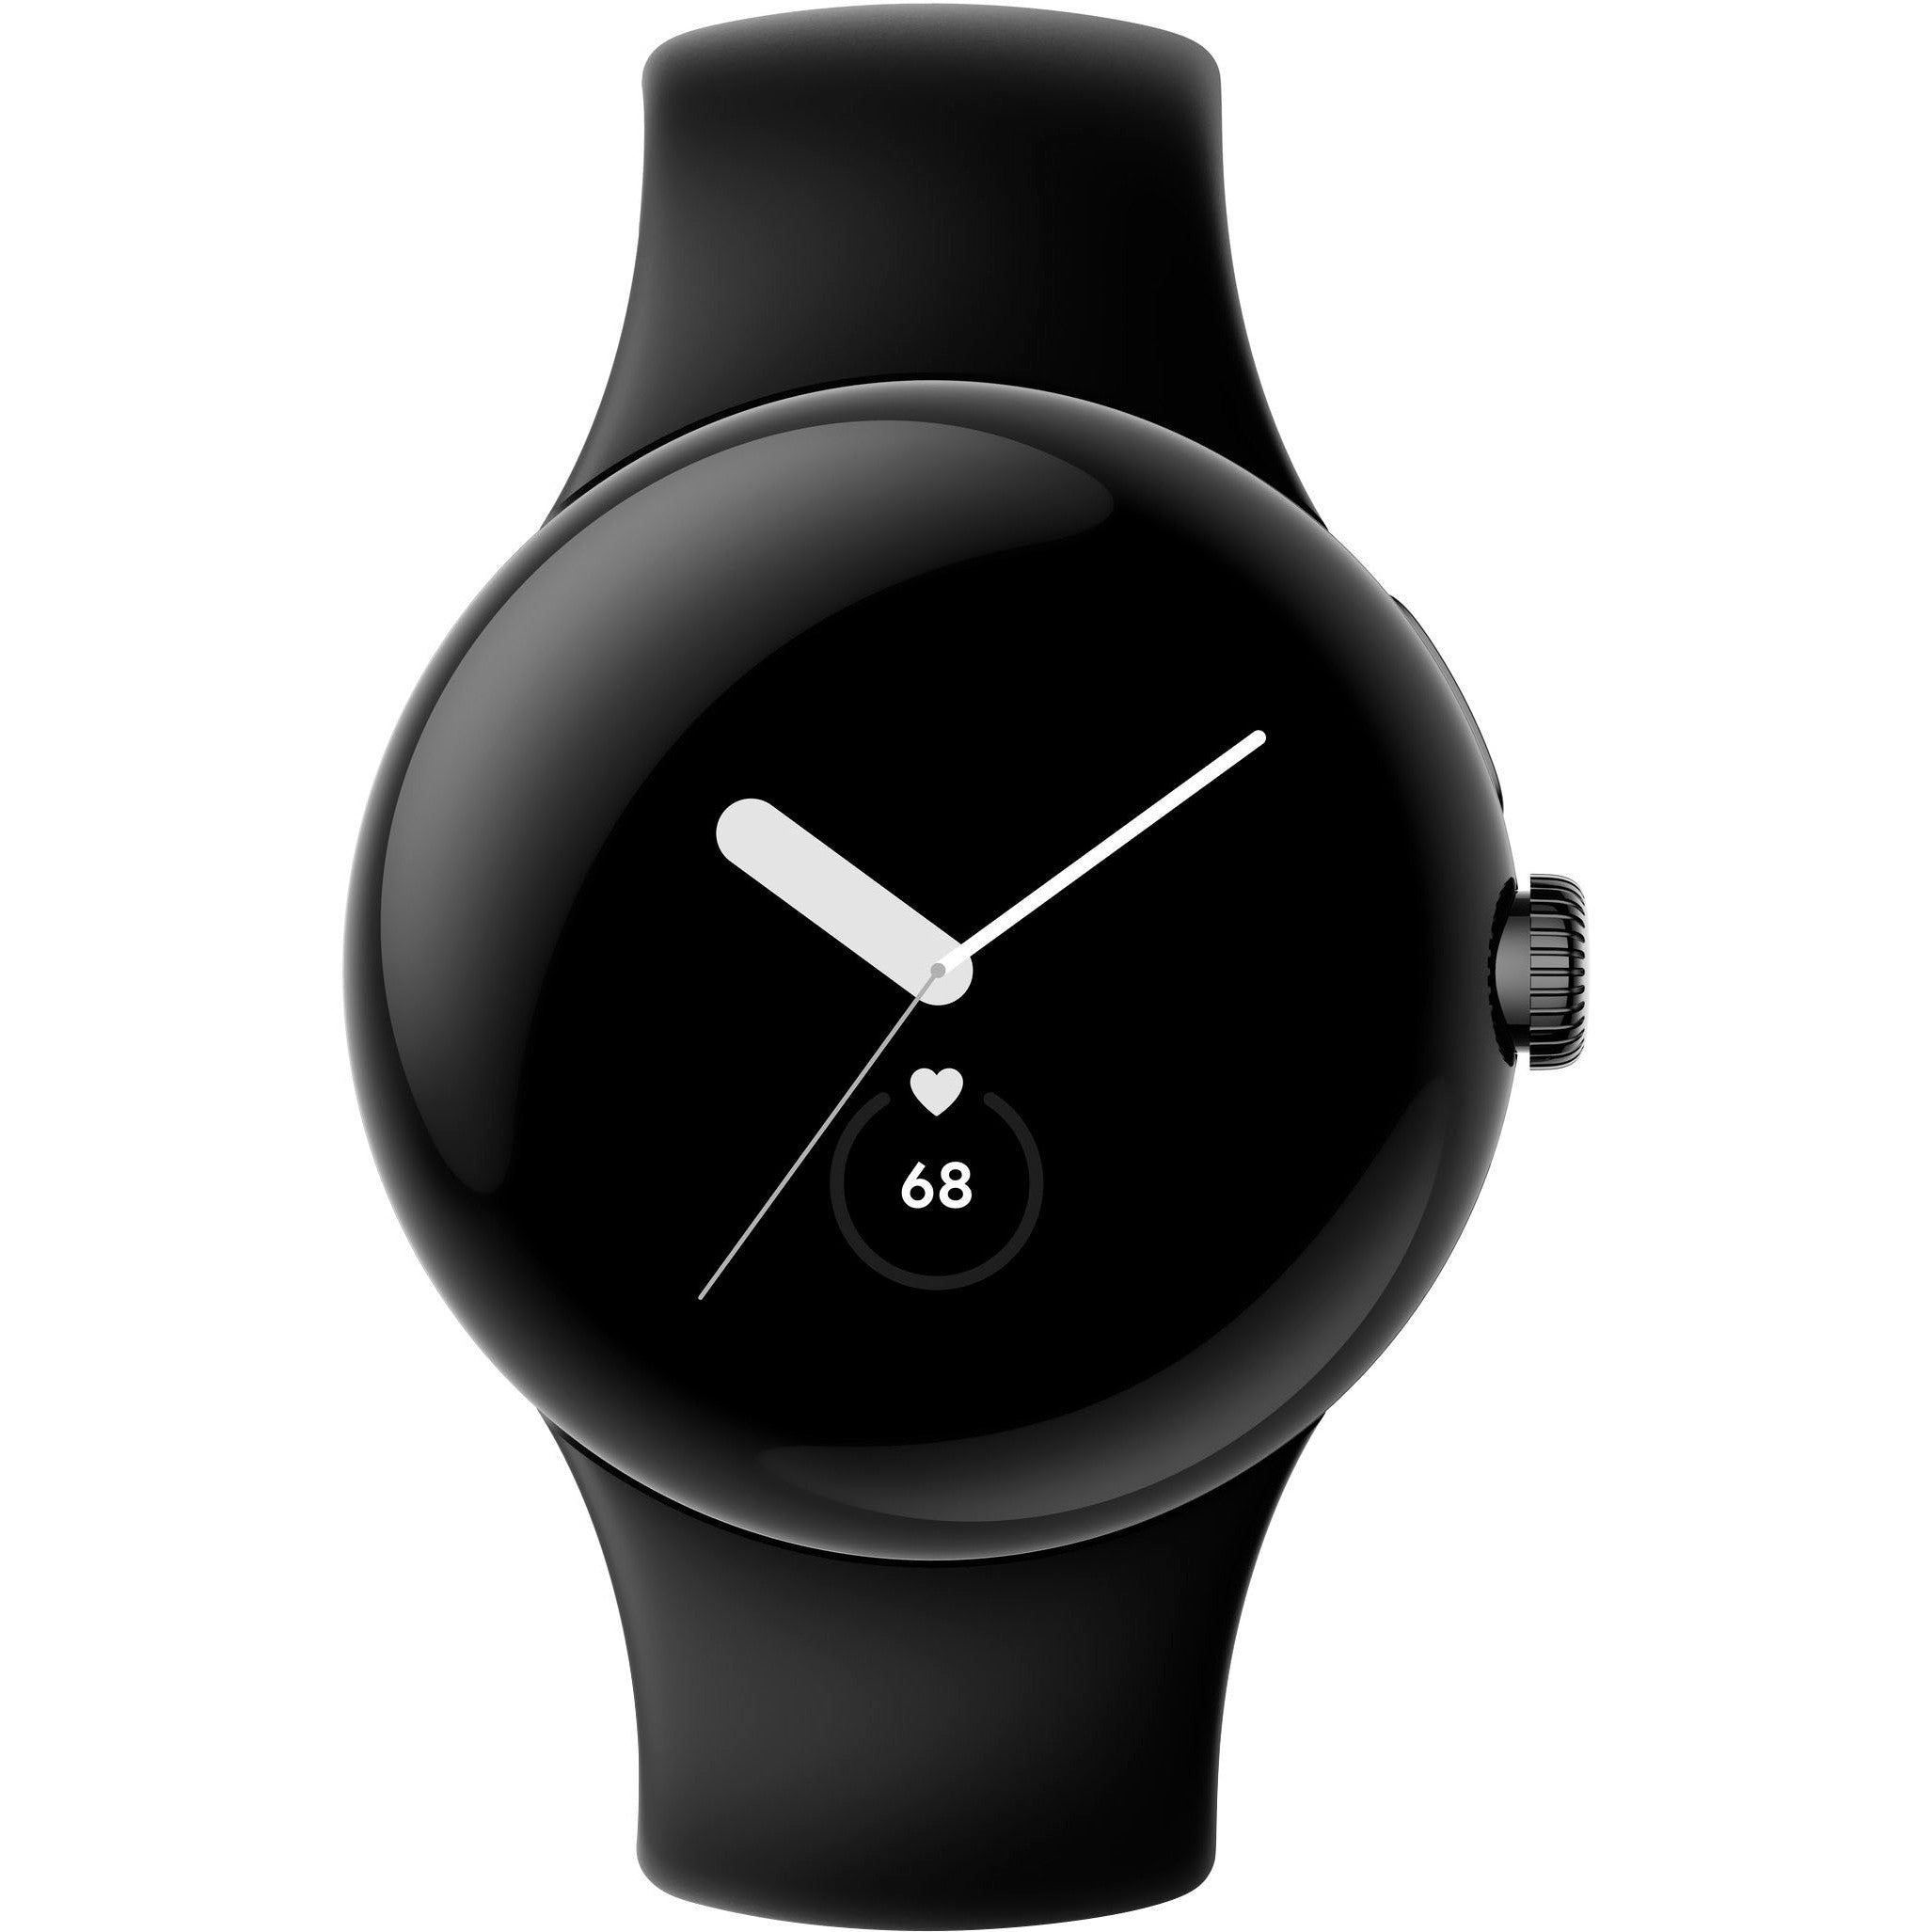 Google GA03119 Pixel Watch with Google Assistant - Black - Refurbished Good